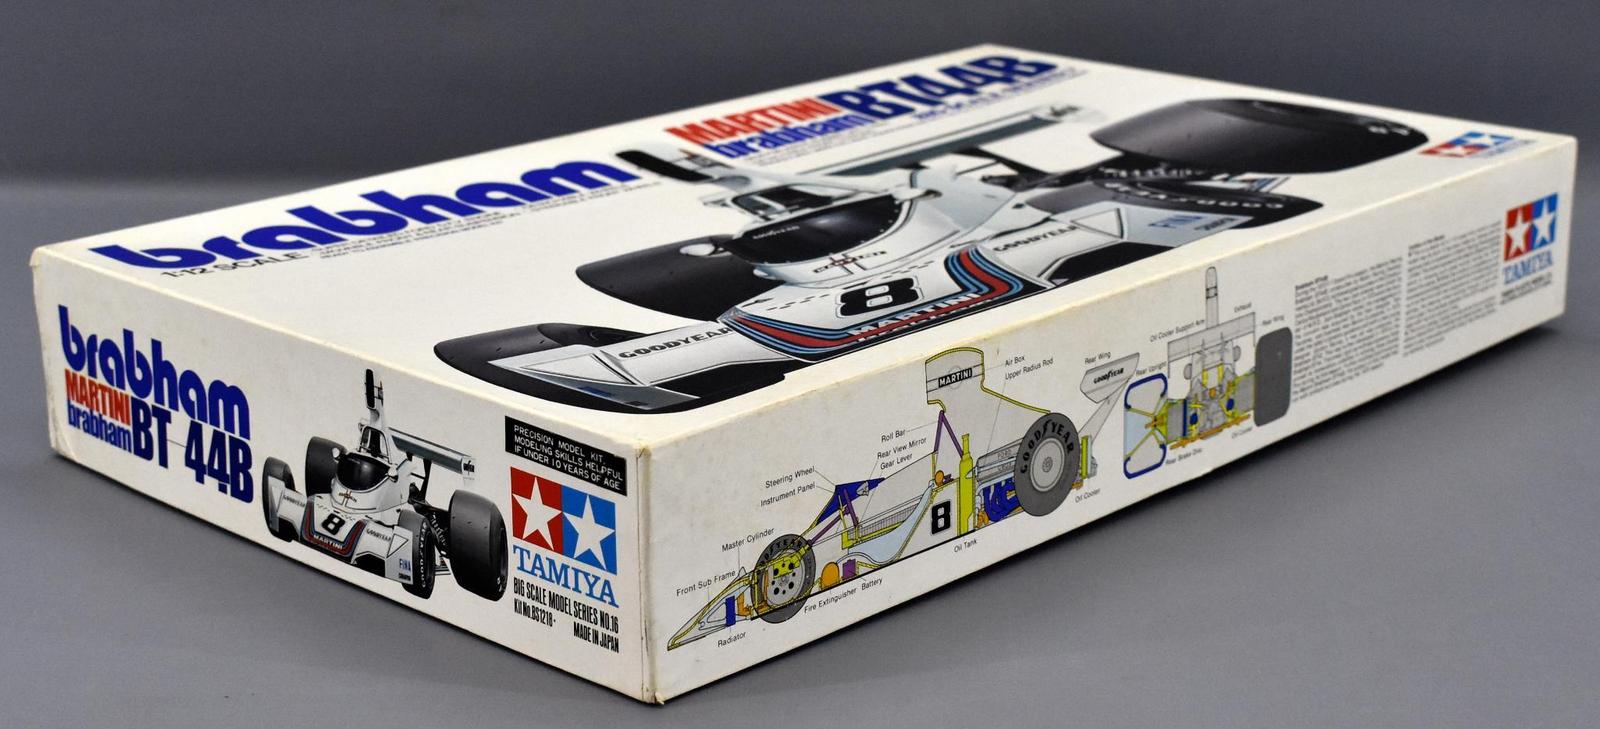 Mint unbuilt Tamiya F1 Martini Brabham BT-44B 1/12 scale model kit